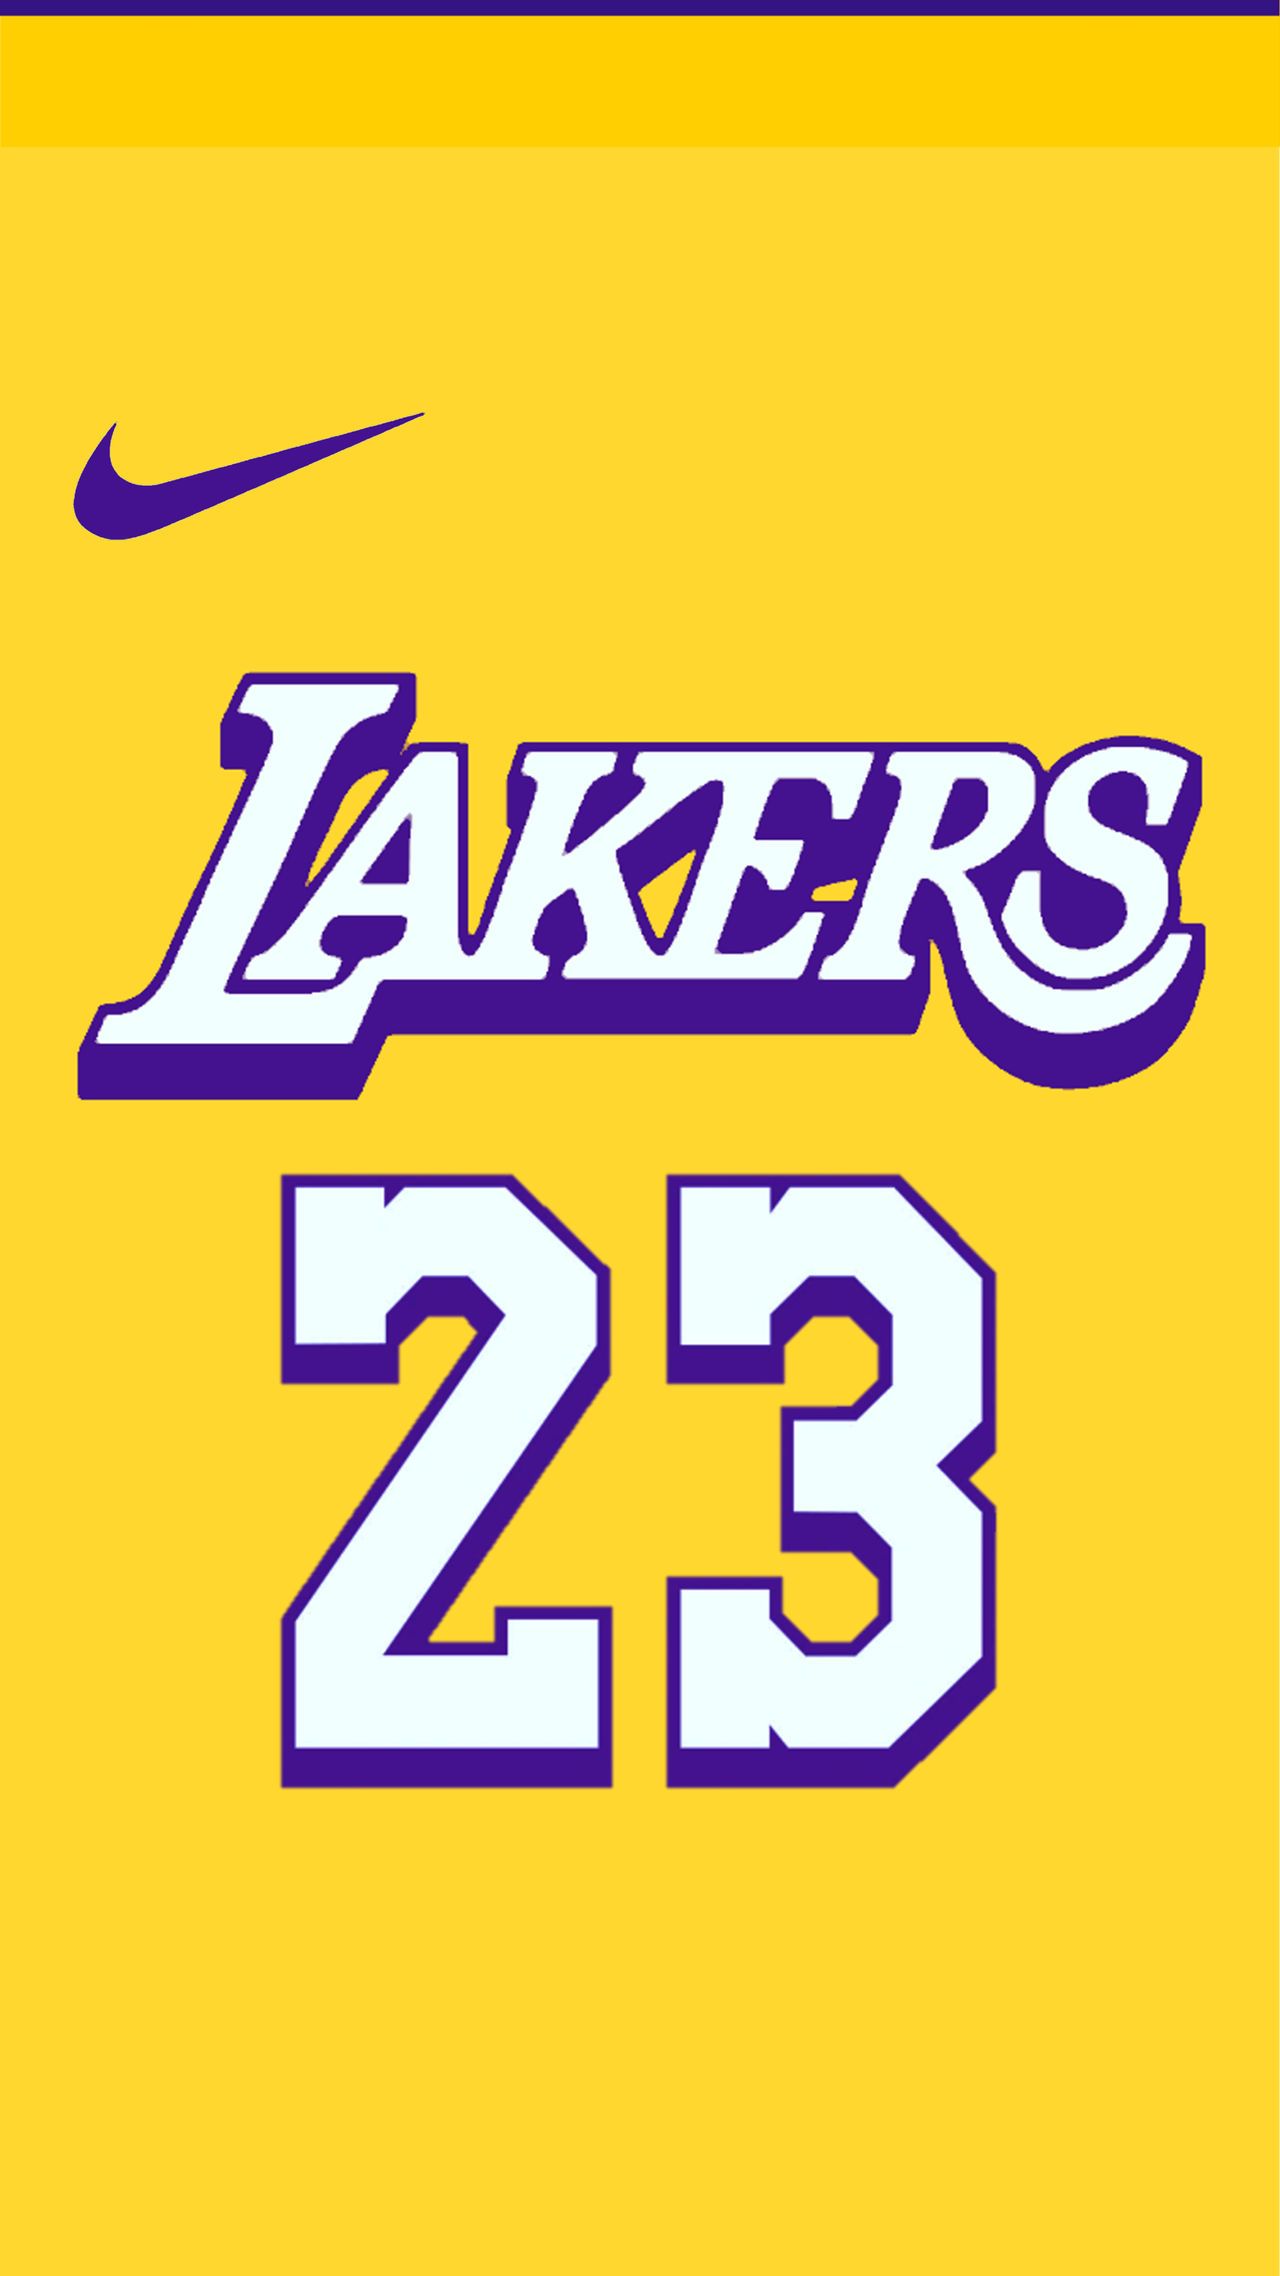 Los Angeles Lakers 2019 20 City Jersey. Lakers Logo, Los Angeles Lakers Logo, Los Angeles Lakers